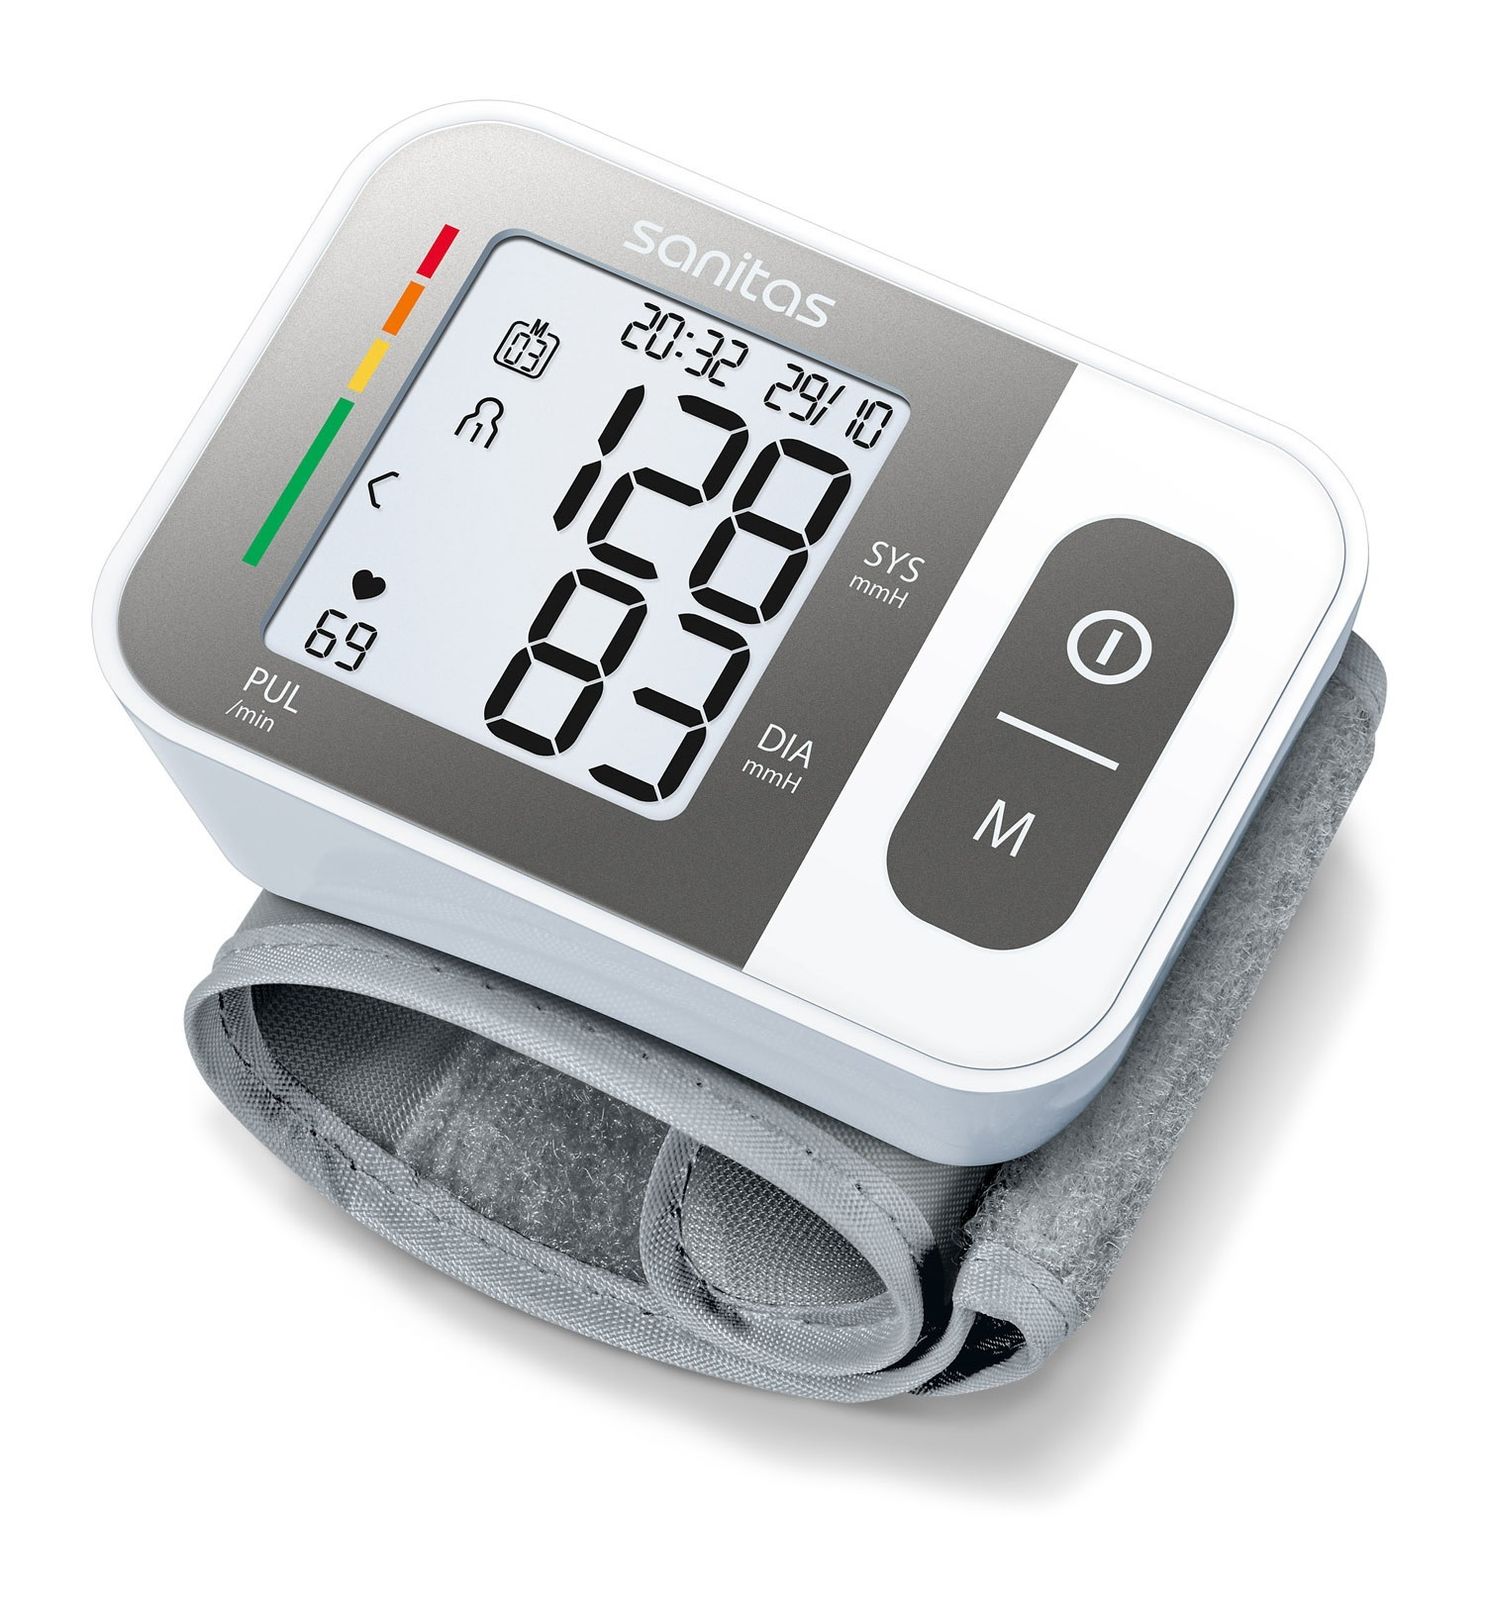 Sanitas SBC 15 Handgelenk-Blutdruckmessgerät online kaufen - Orbisana